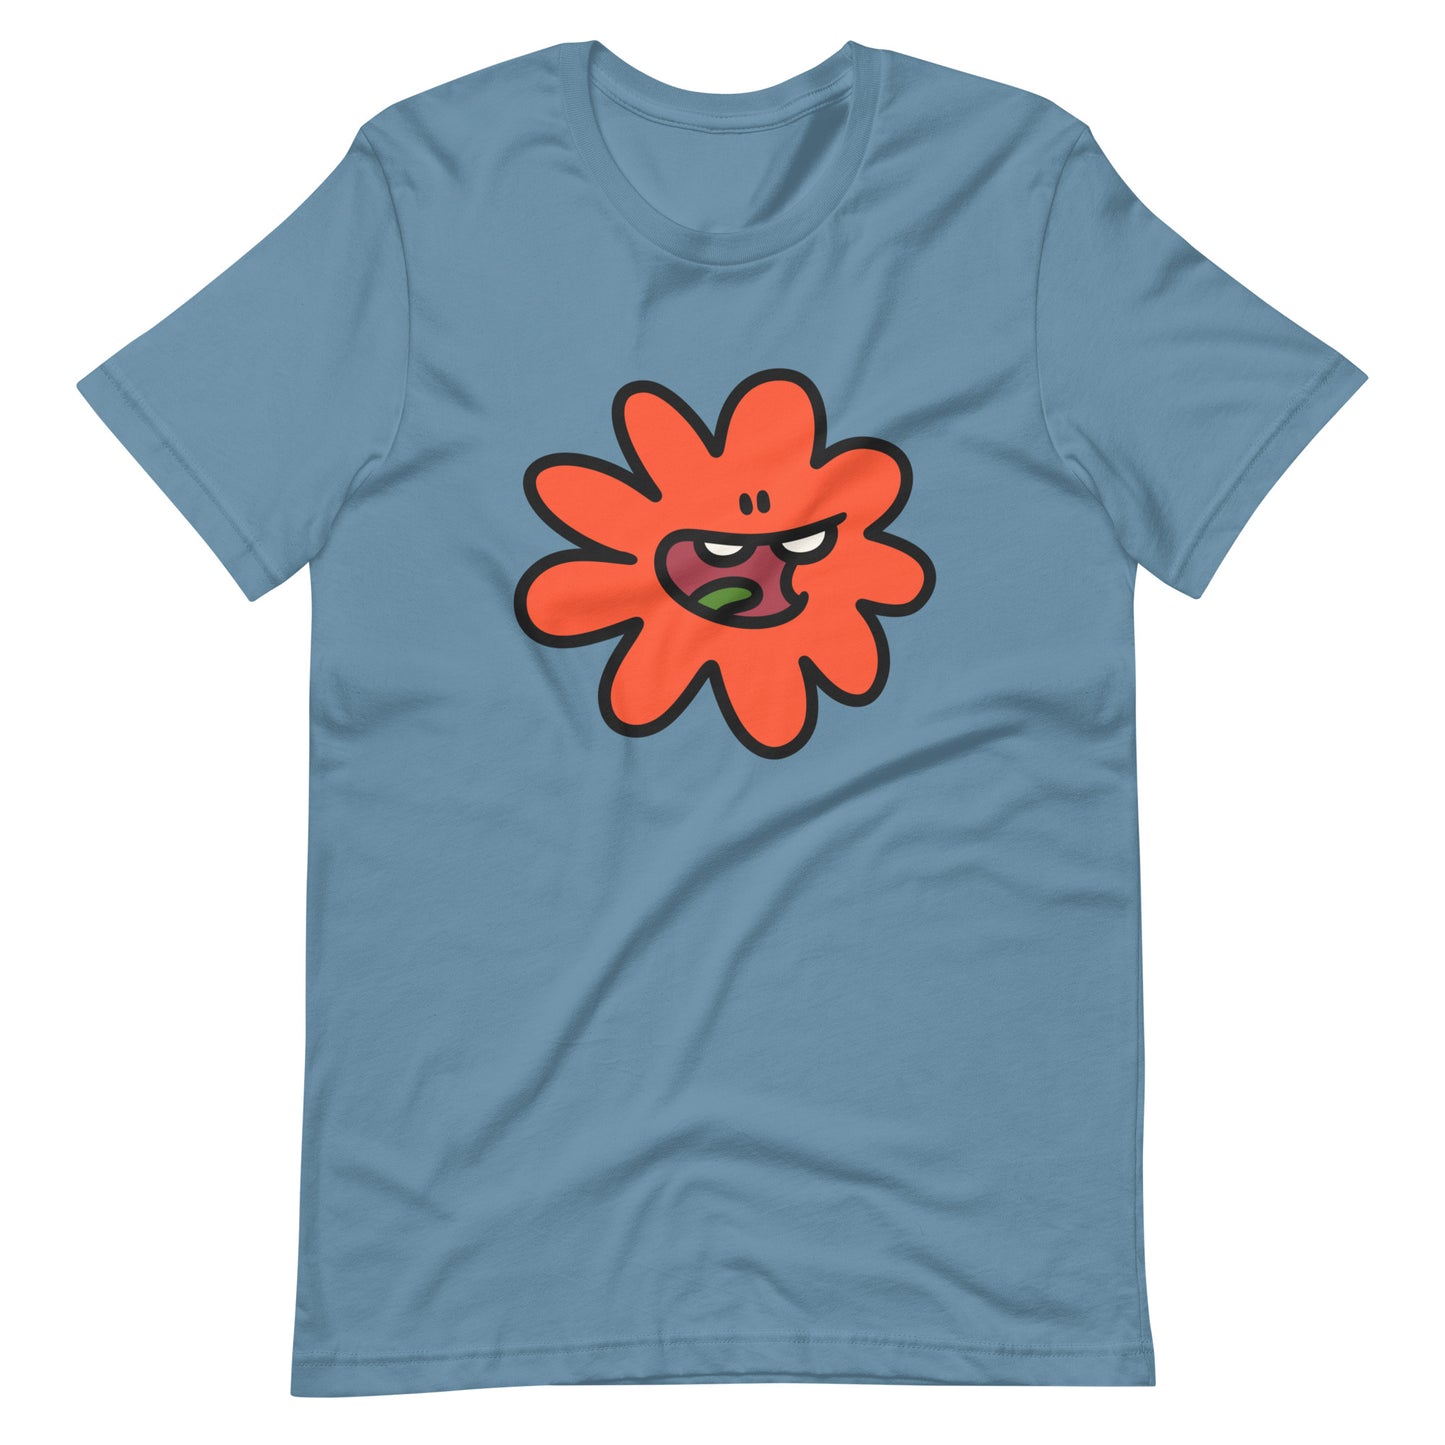 Flower Fella t-shirt